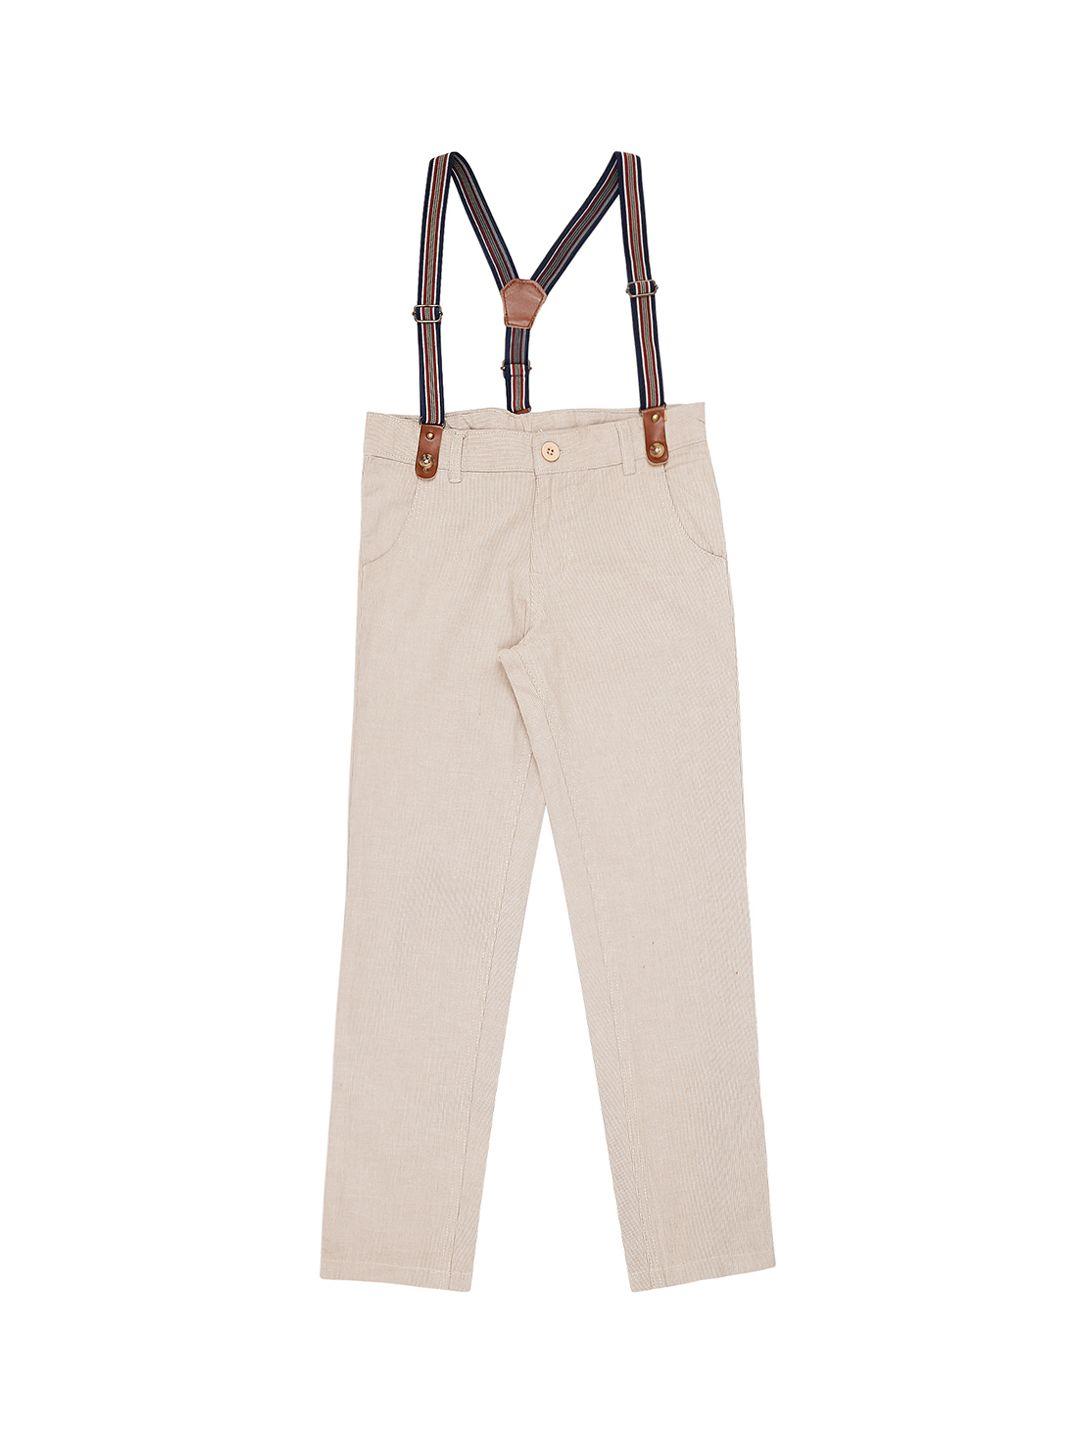 pantaloons-junior-boys-beige-&-grey-regular-fit-striped-regular-trousers